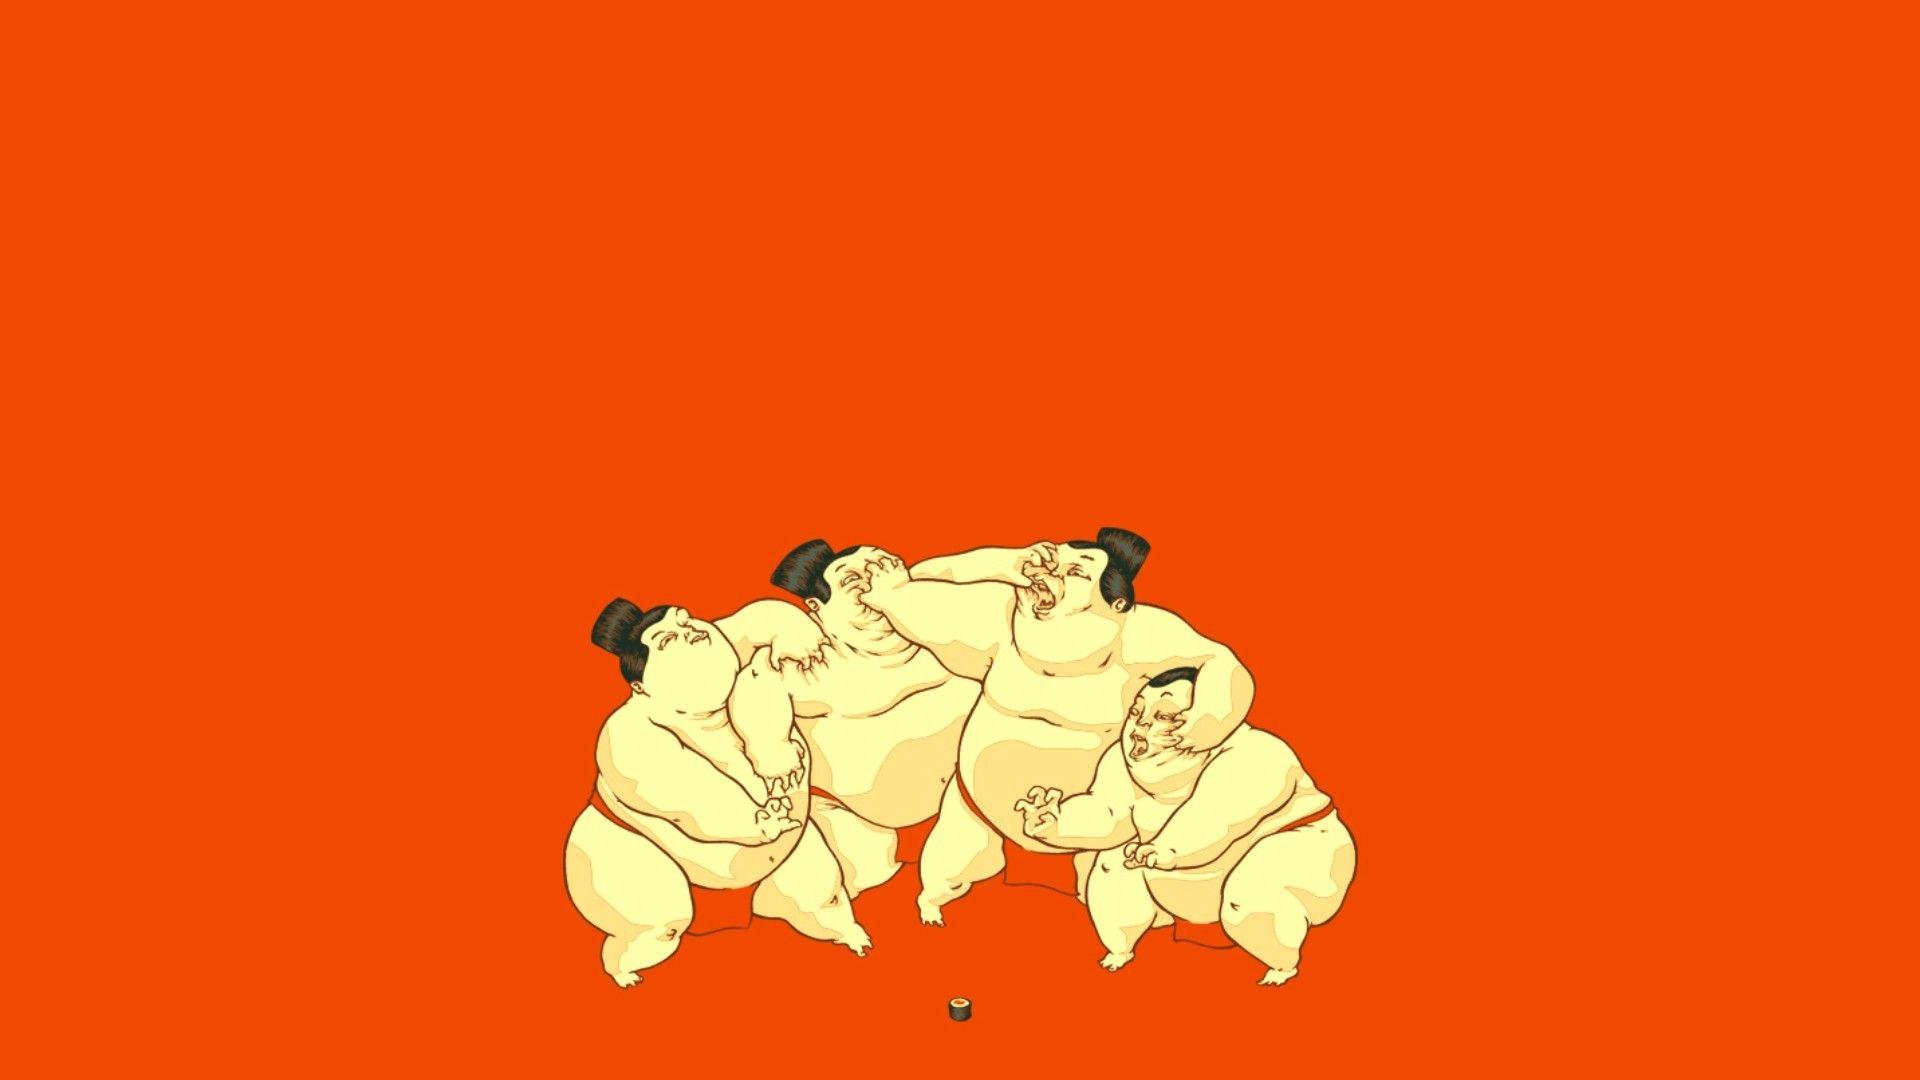 Sumo, orange background wallpaper and image, picture